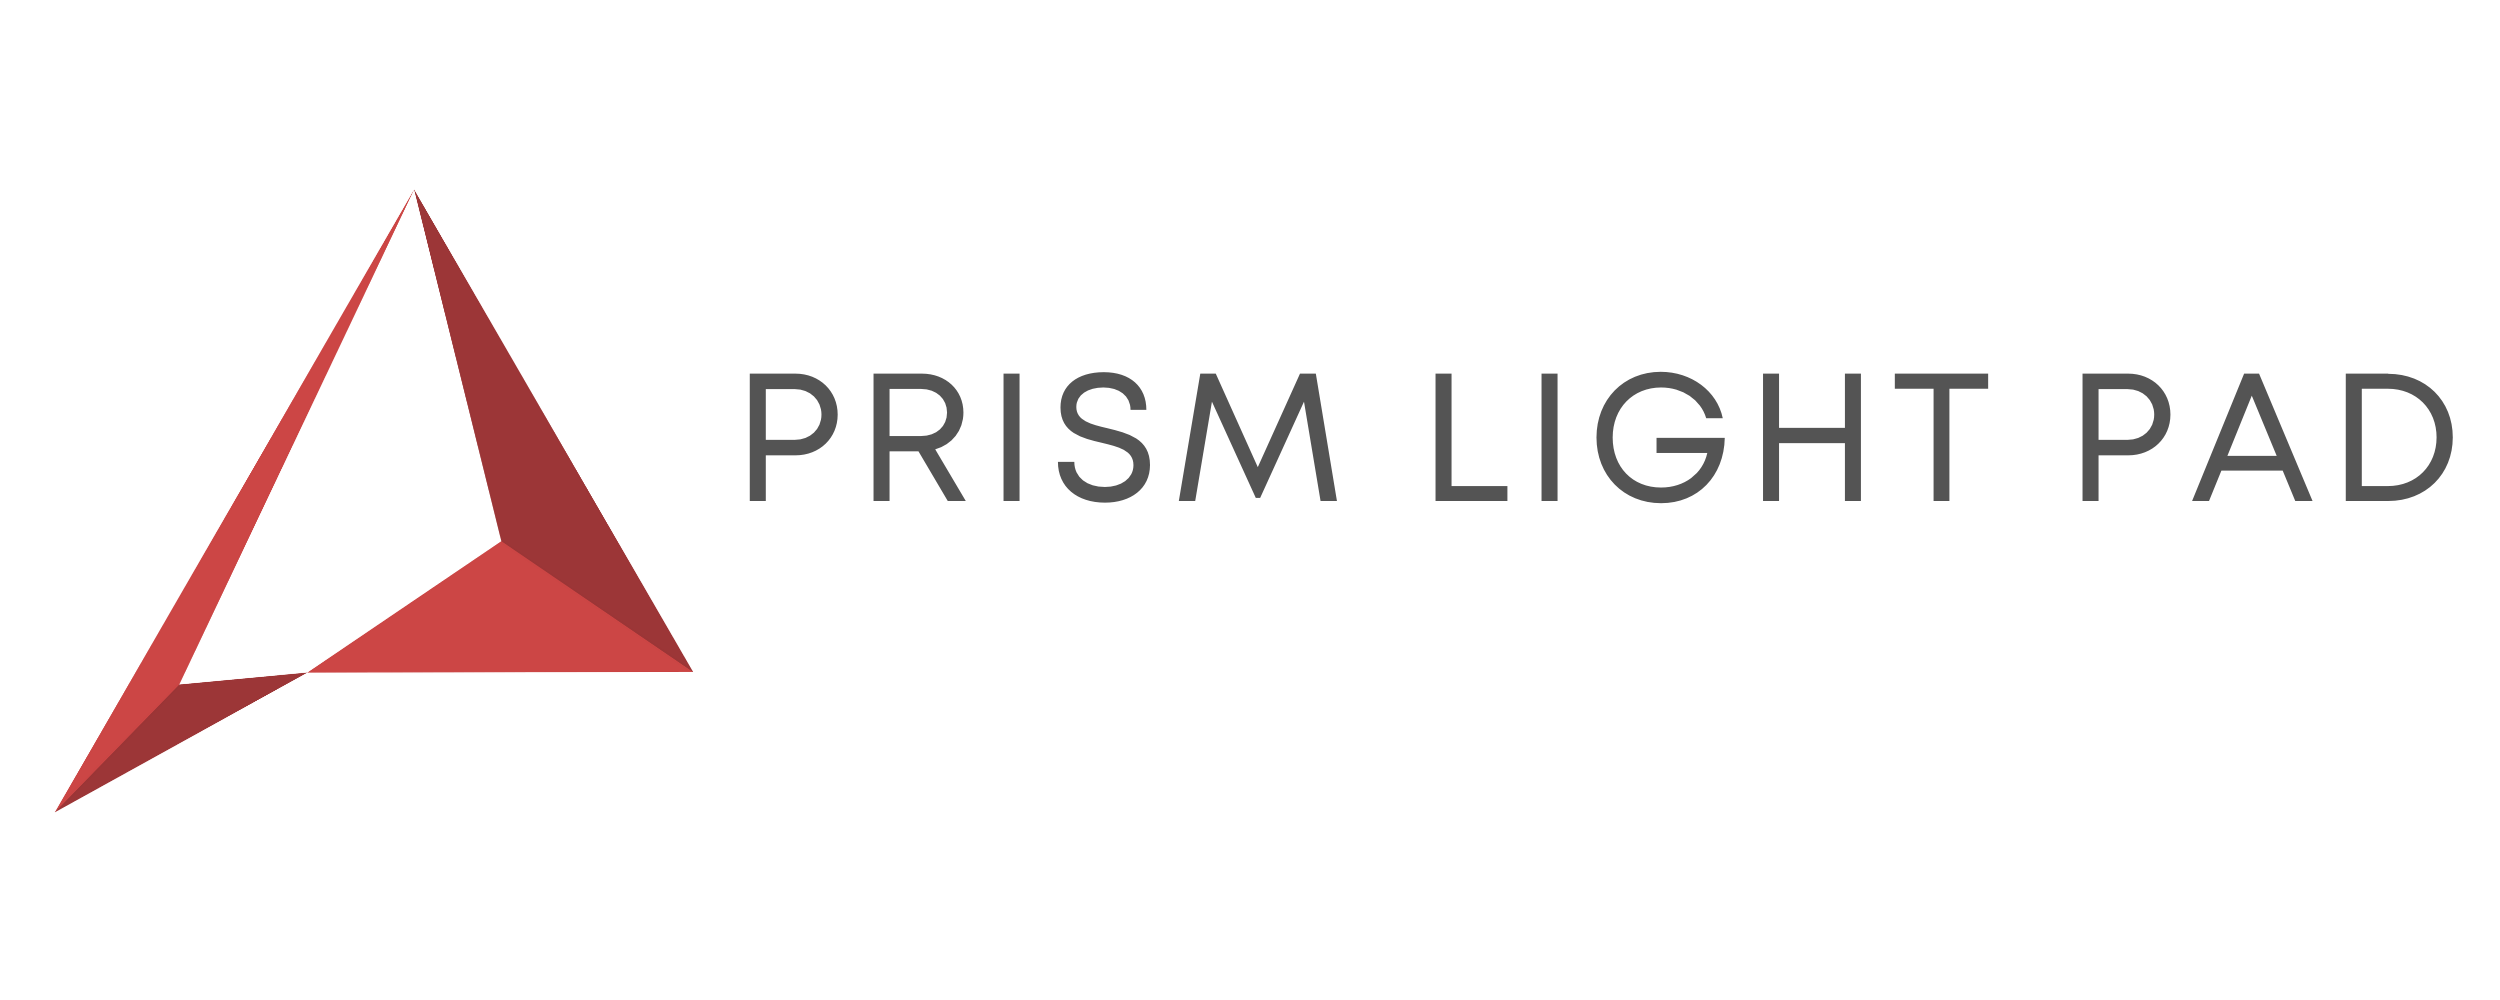 Prism Light Pad